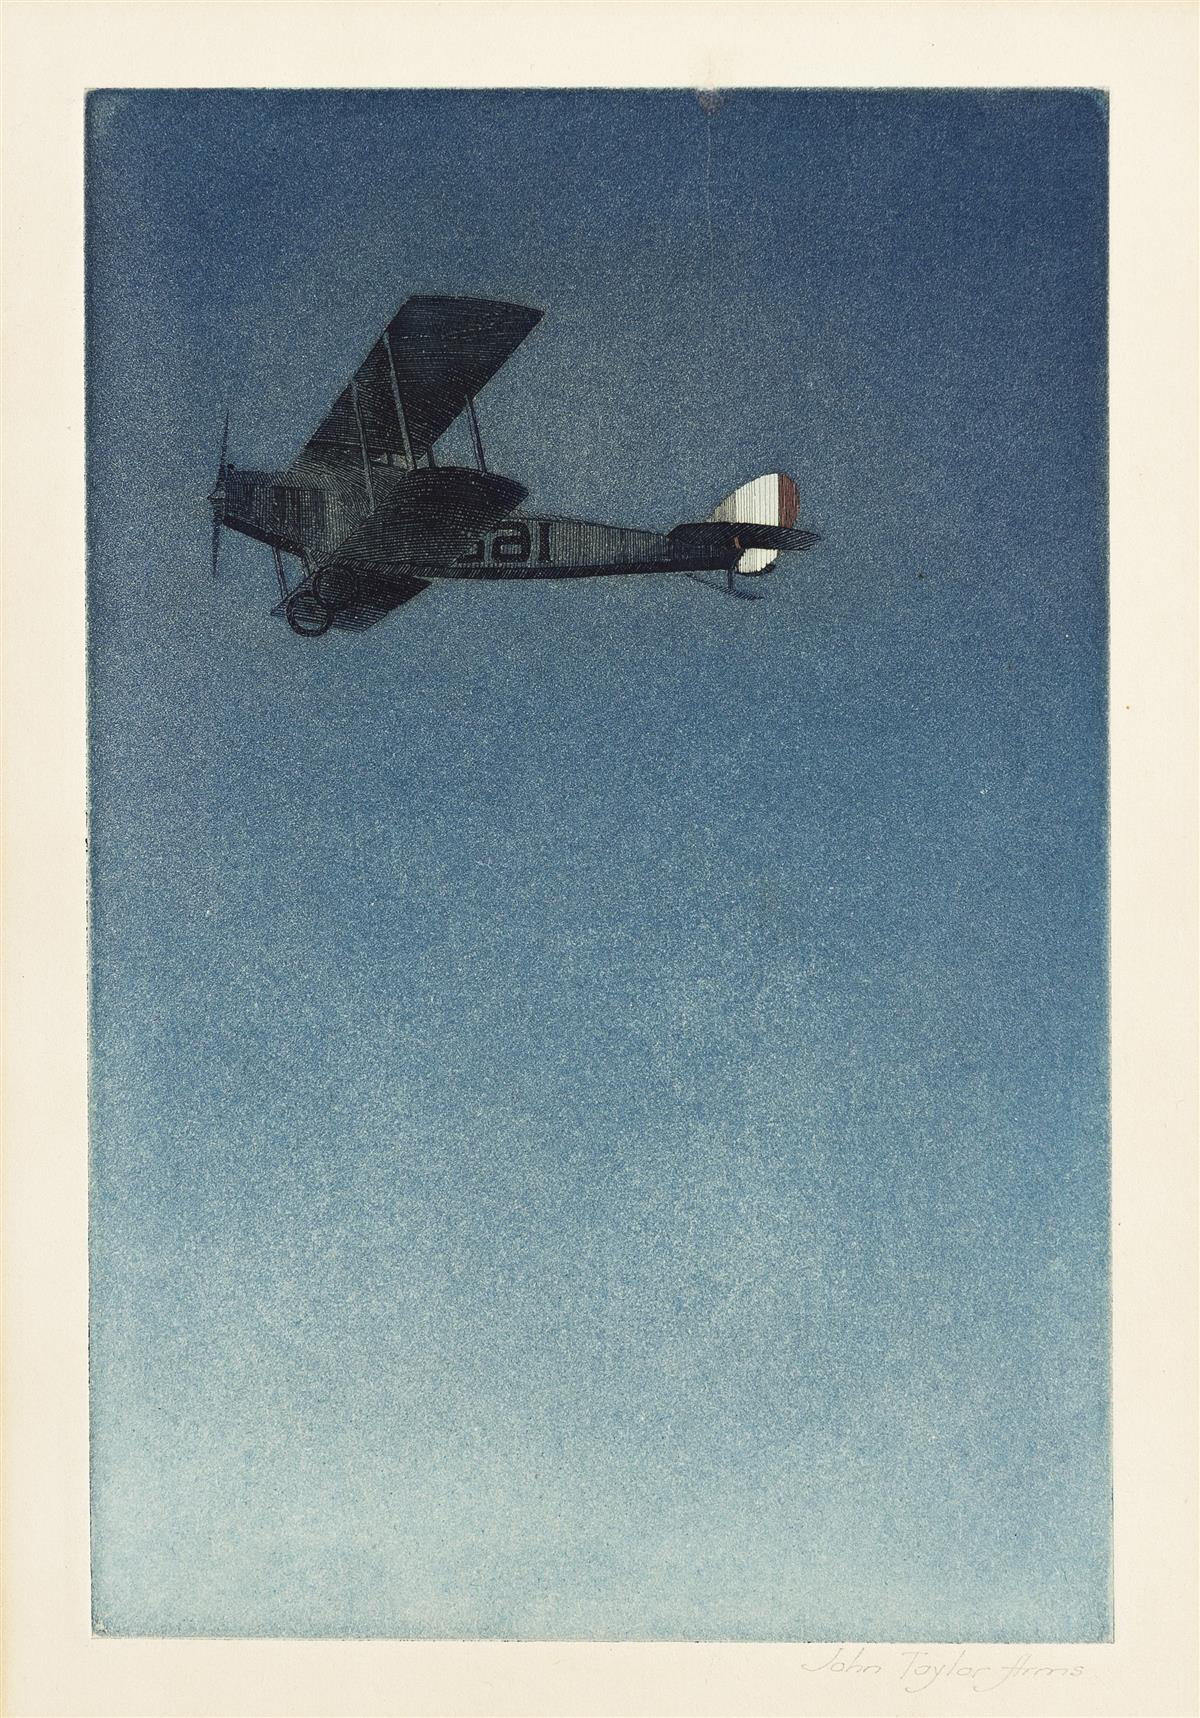 JOHN TAYLOR ARMS The Birdman (Fuselage— World War I).